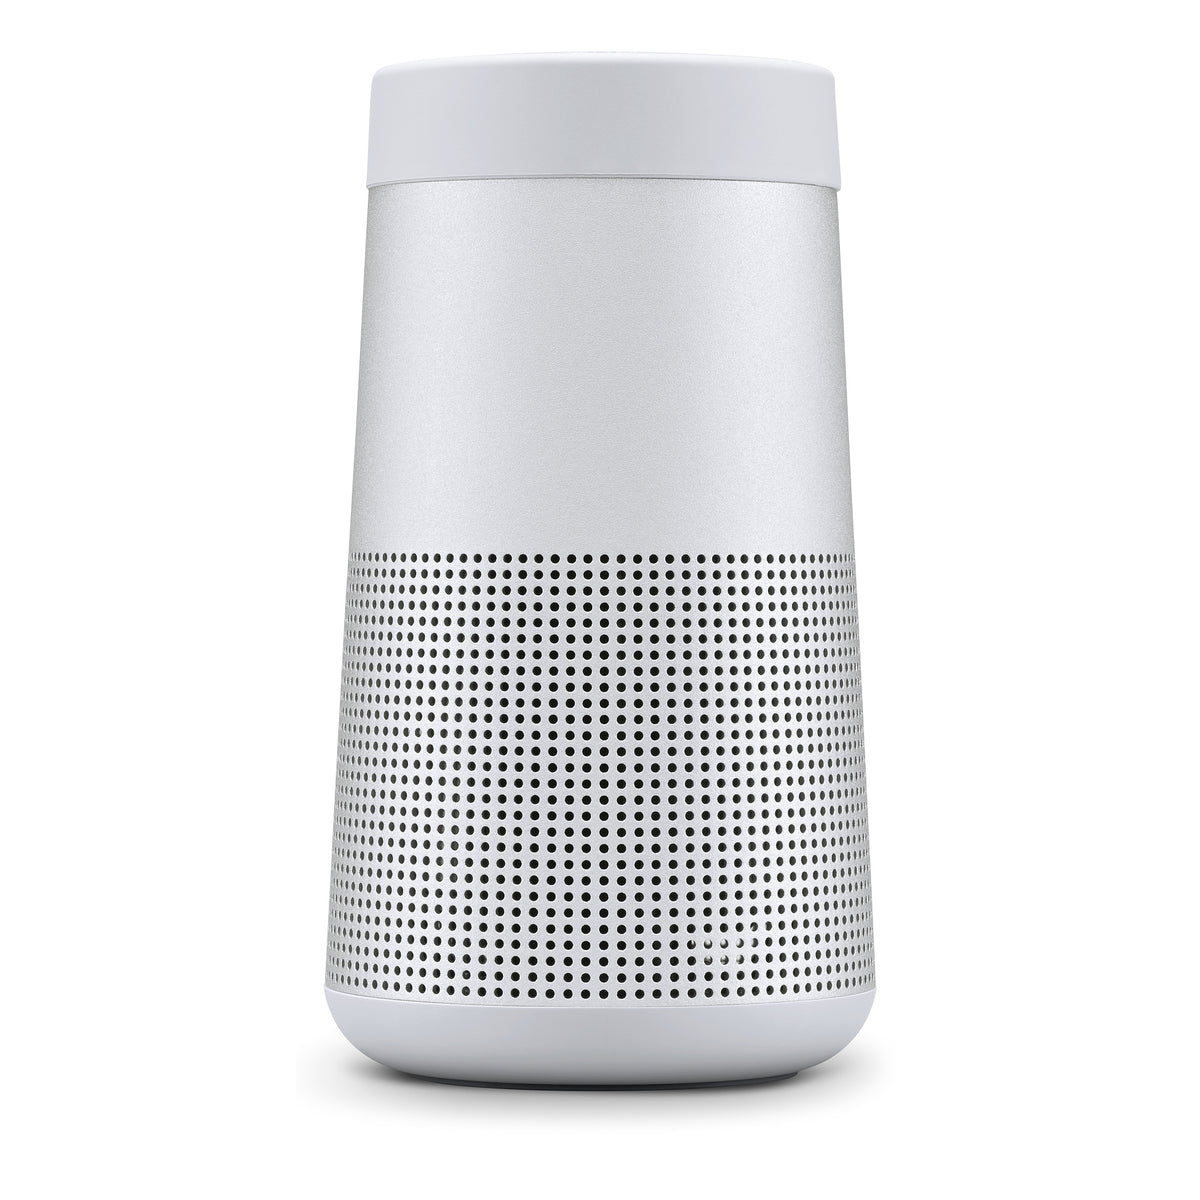 Bose SoundLink Revolve Bluetooth Speaker - AVStore